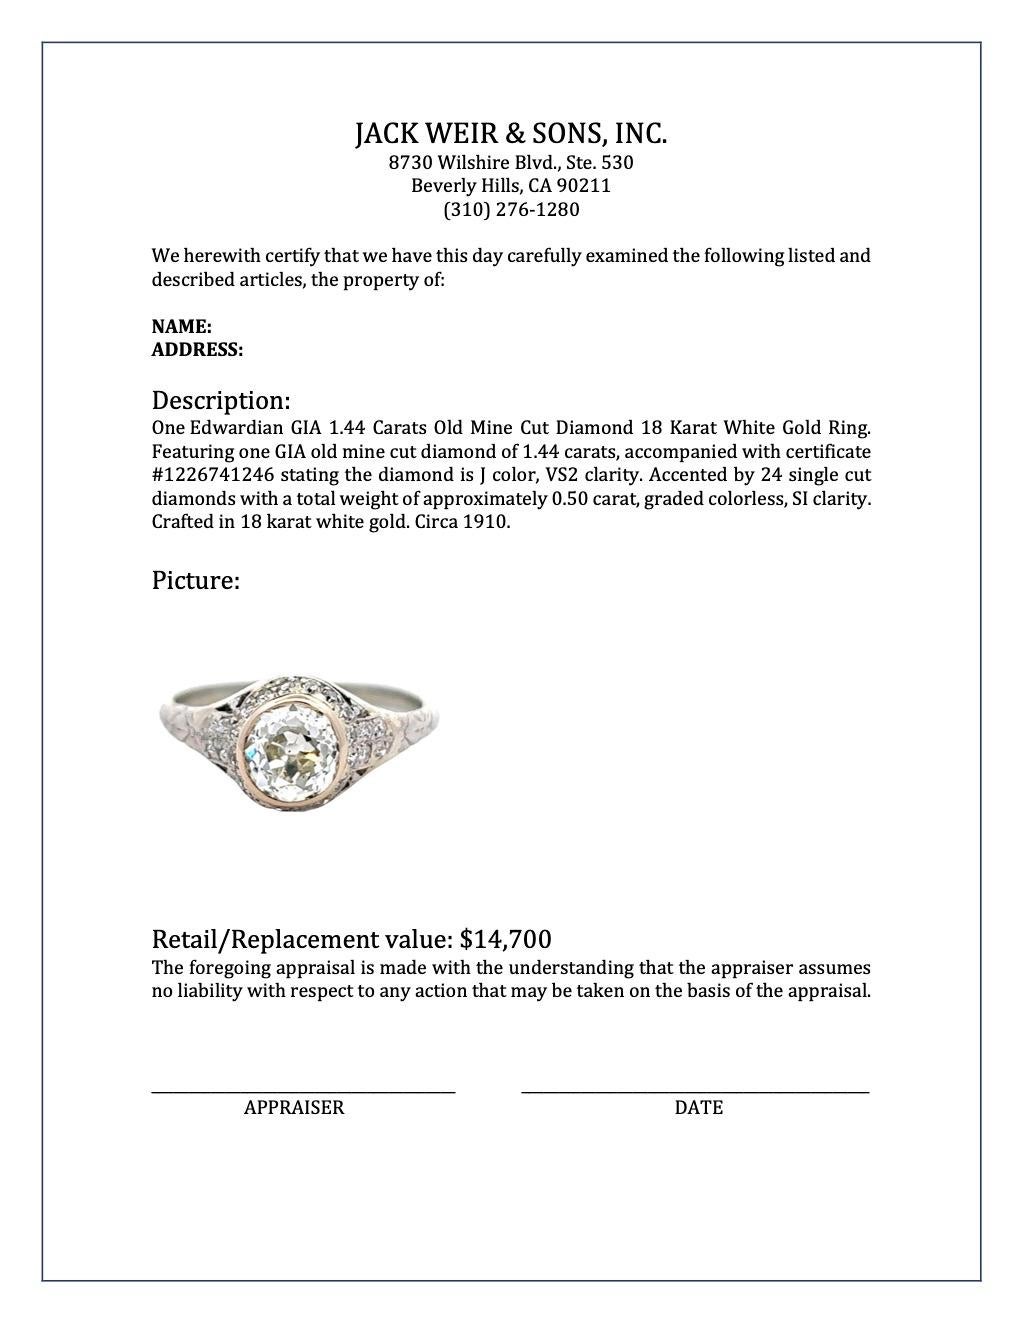 Edwardian GIA 1.44 Carats Old Mine Cut Diamond 18 Karat White Gold Ring 4